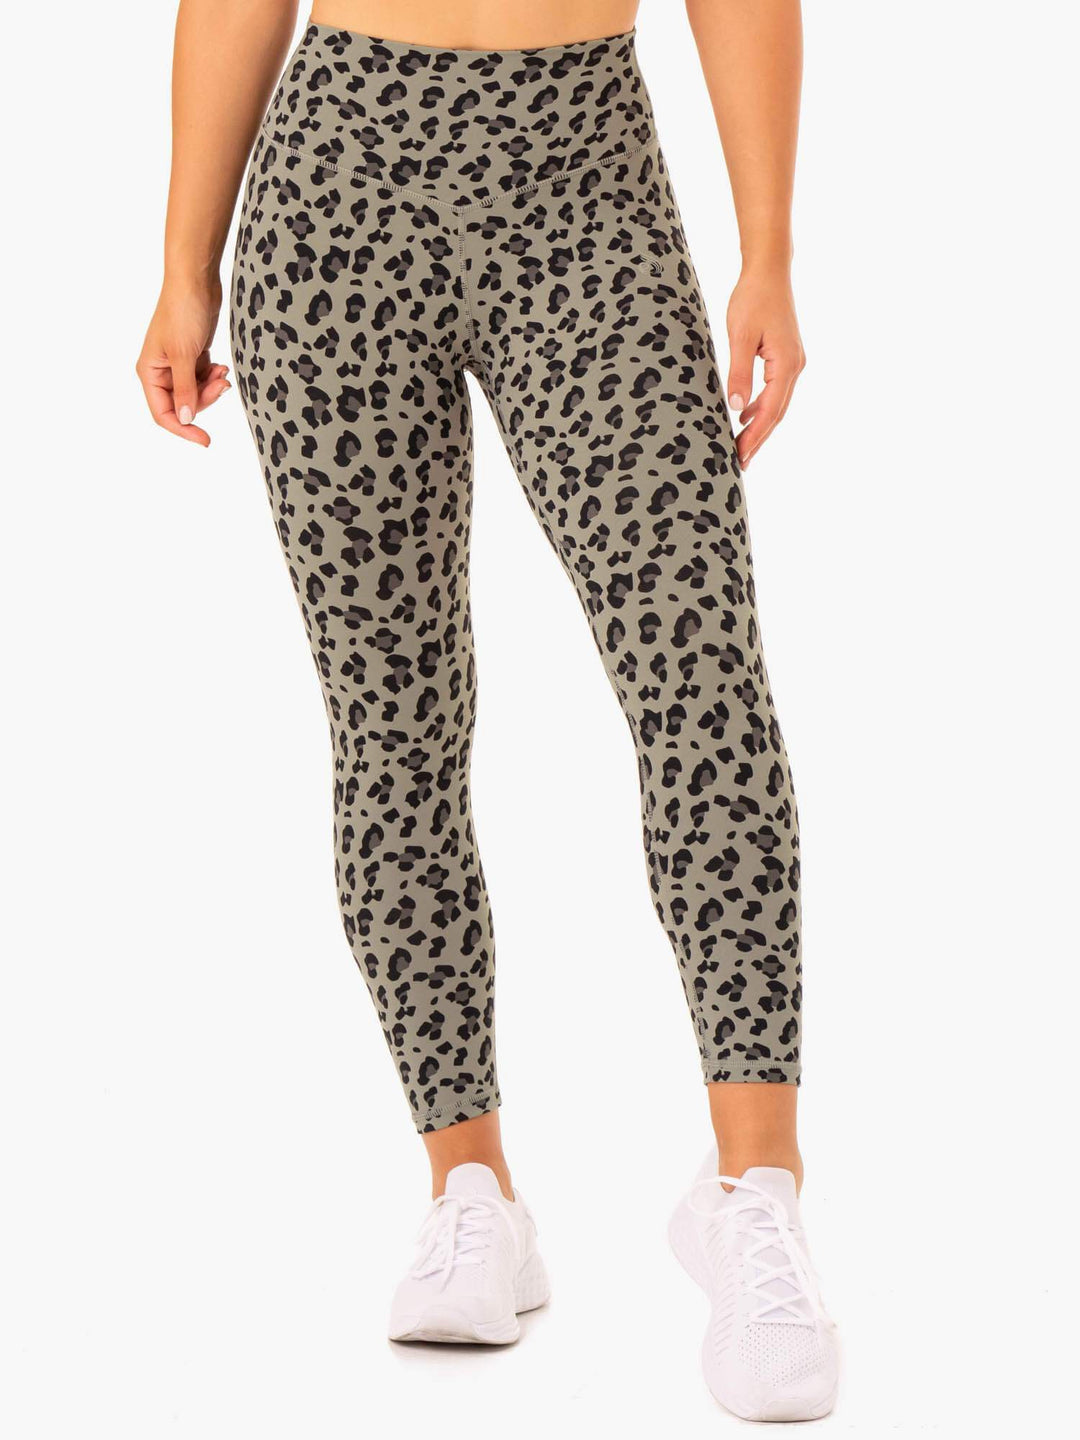 Hybrid Full Length Gym Leggings - Khaki Leopard Clothing Ryderwear 